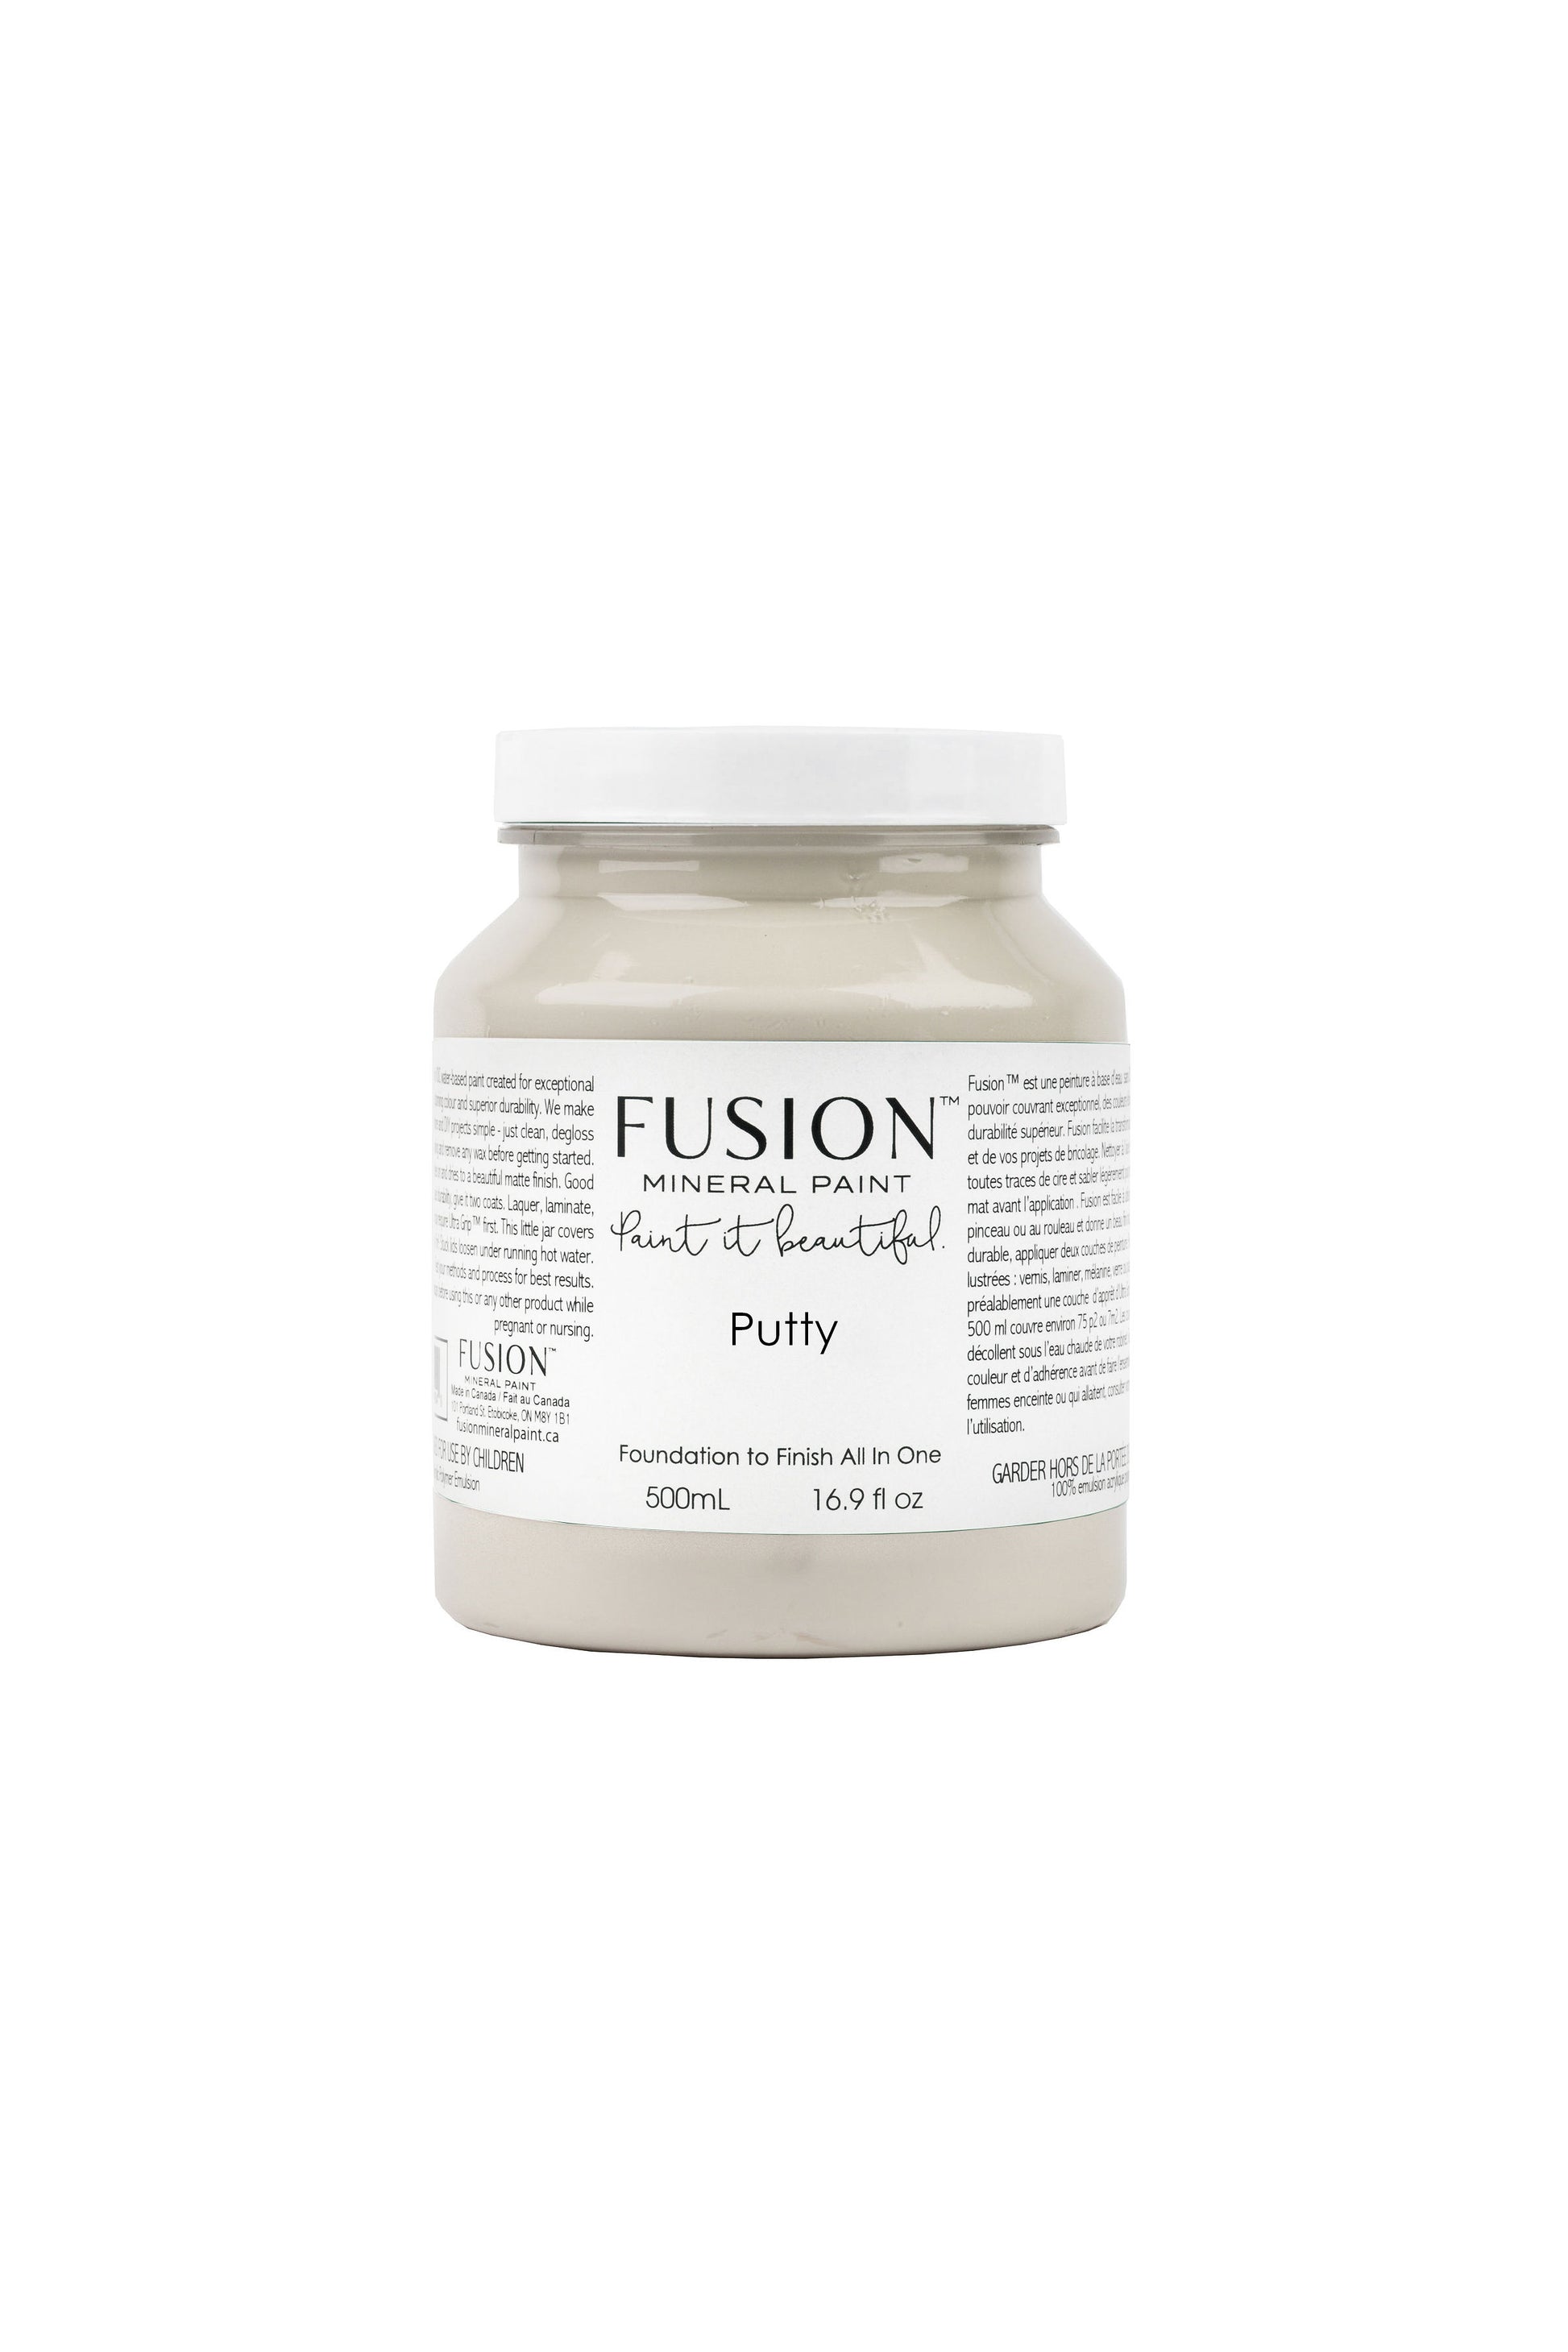 Putty Fusion Mineral Paint, Beige - Grey Paint Color| 500ml Pint Size